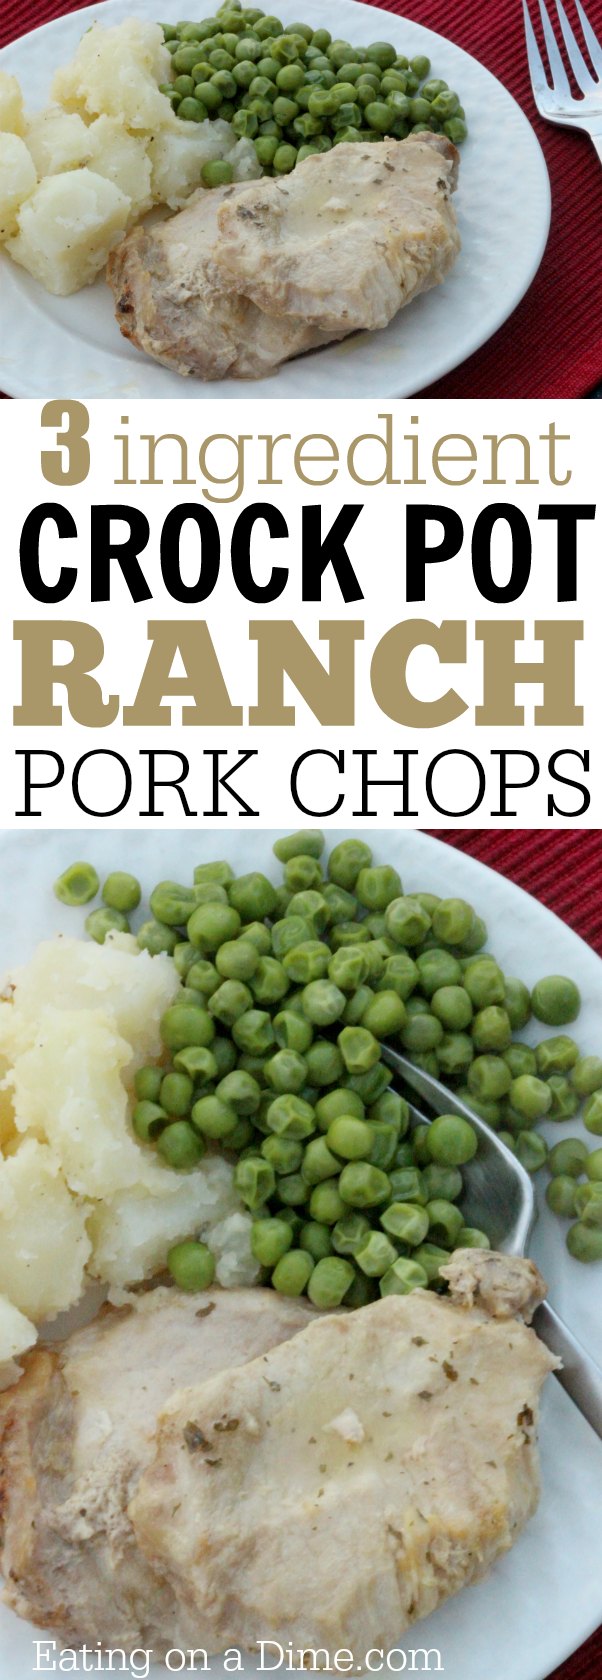 Crock pot Ranch Pork Chops - Eating on a Dime